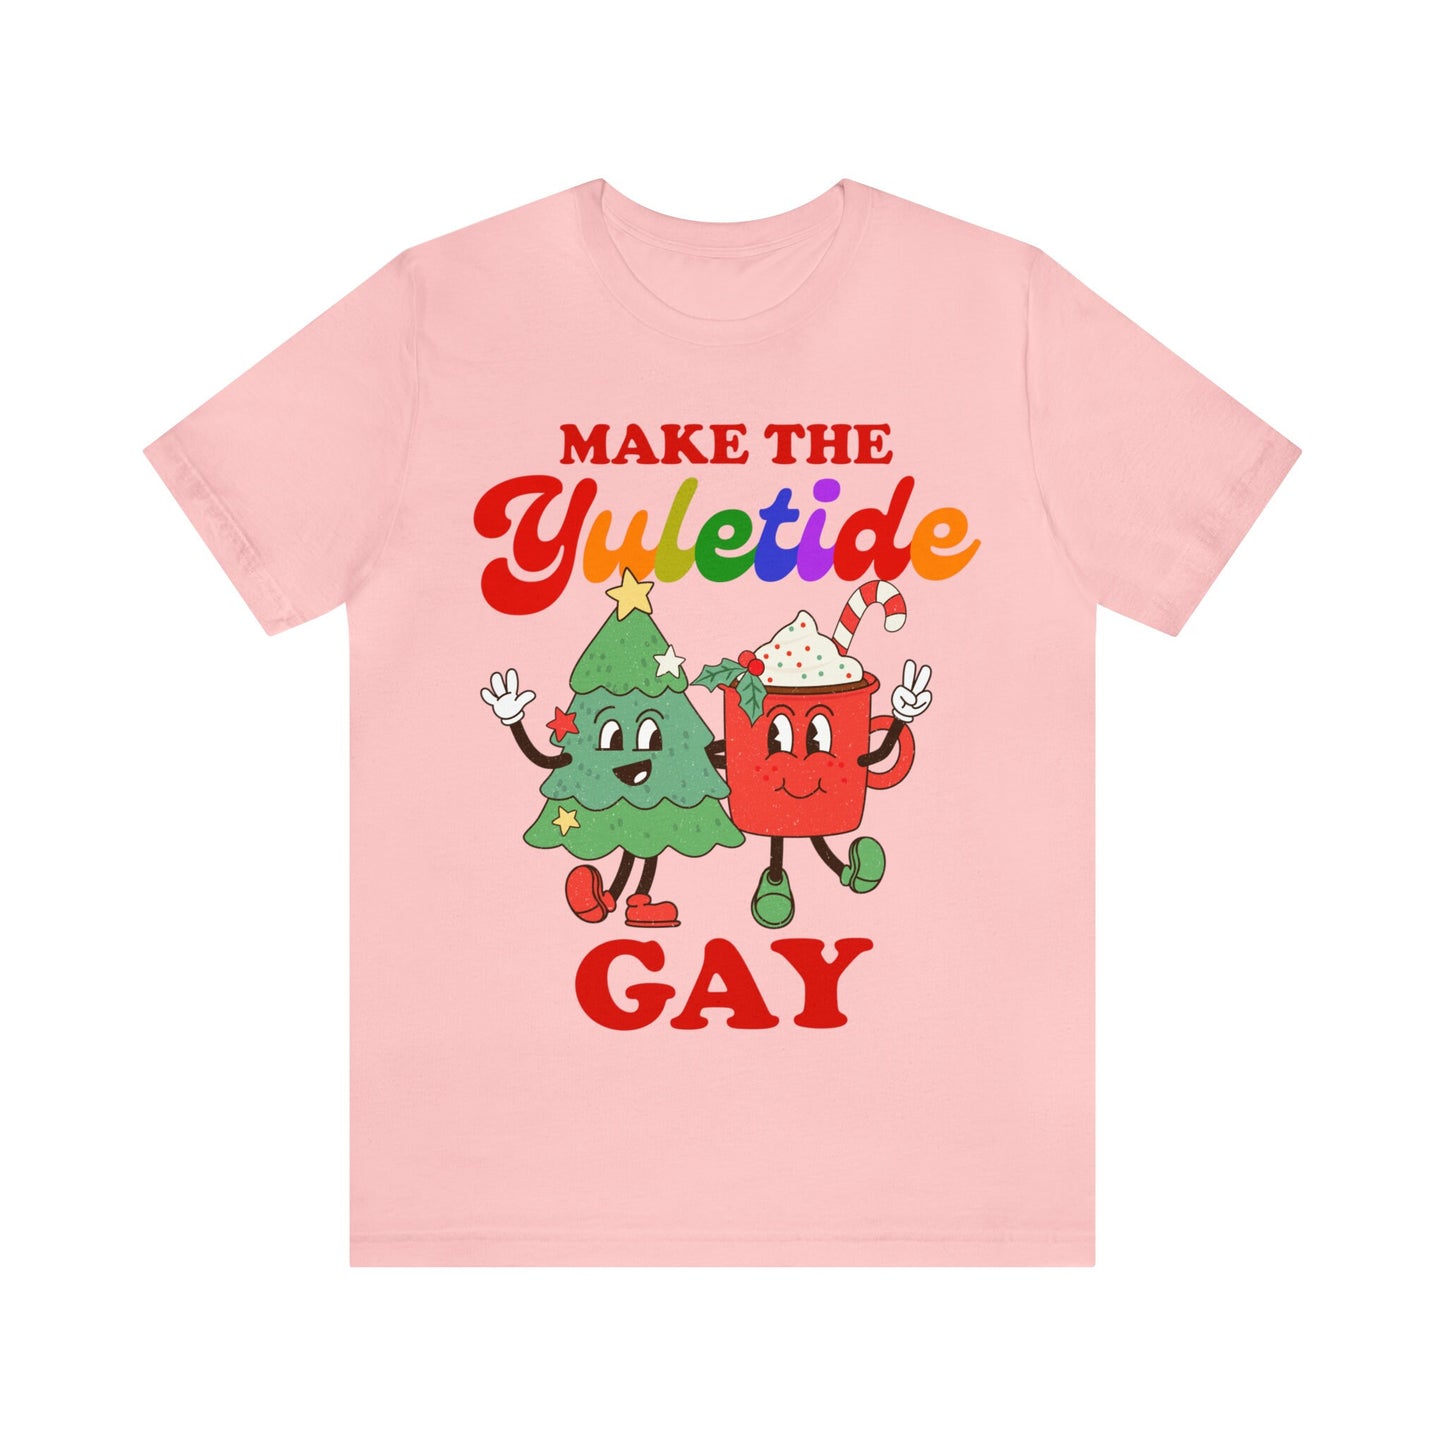 Make the yuletide gay shirt